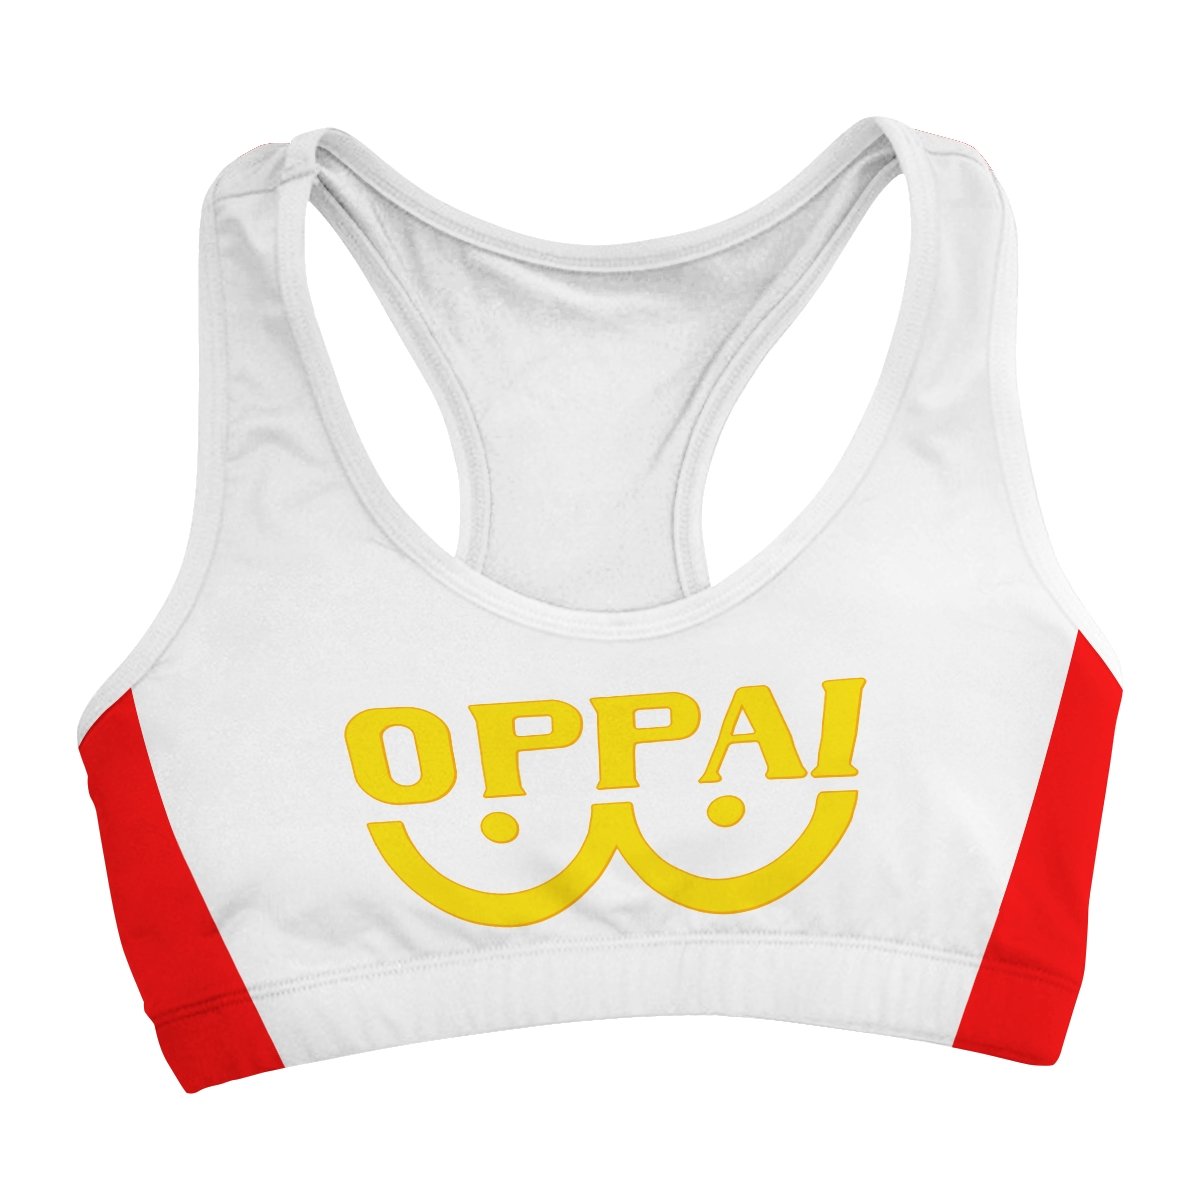 saitama oppai active wear set 857116 - Anime Swimsuits